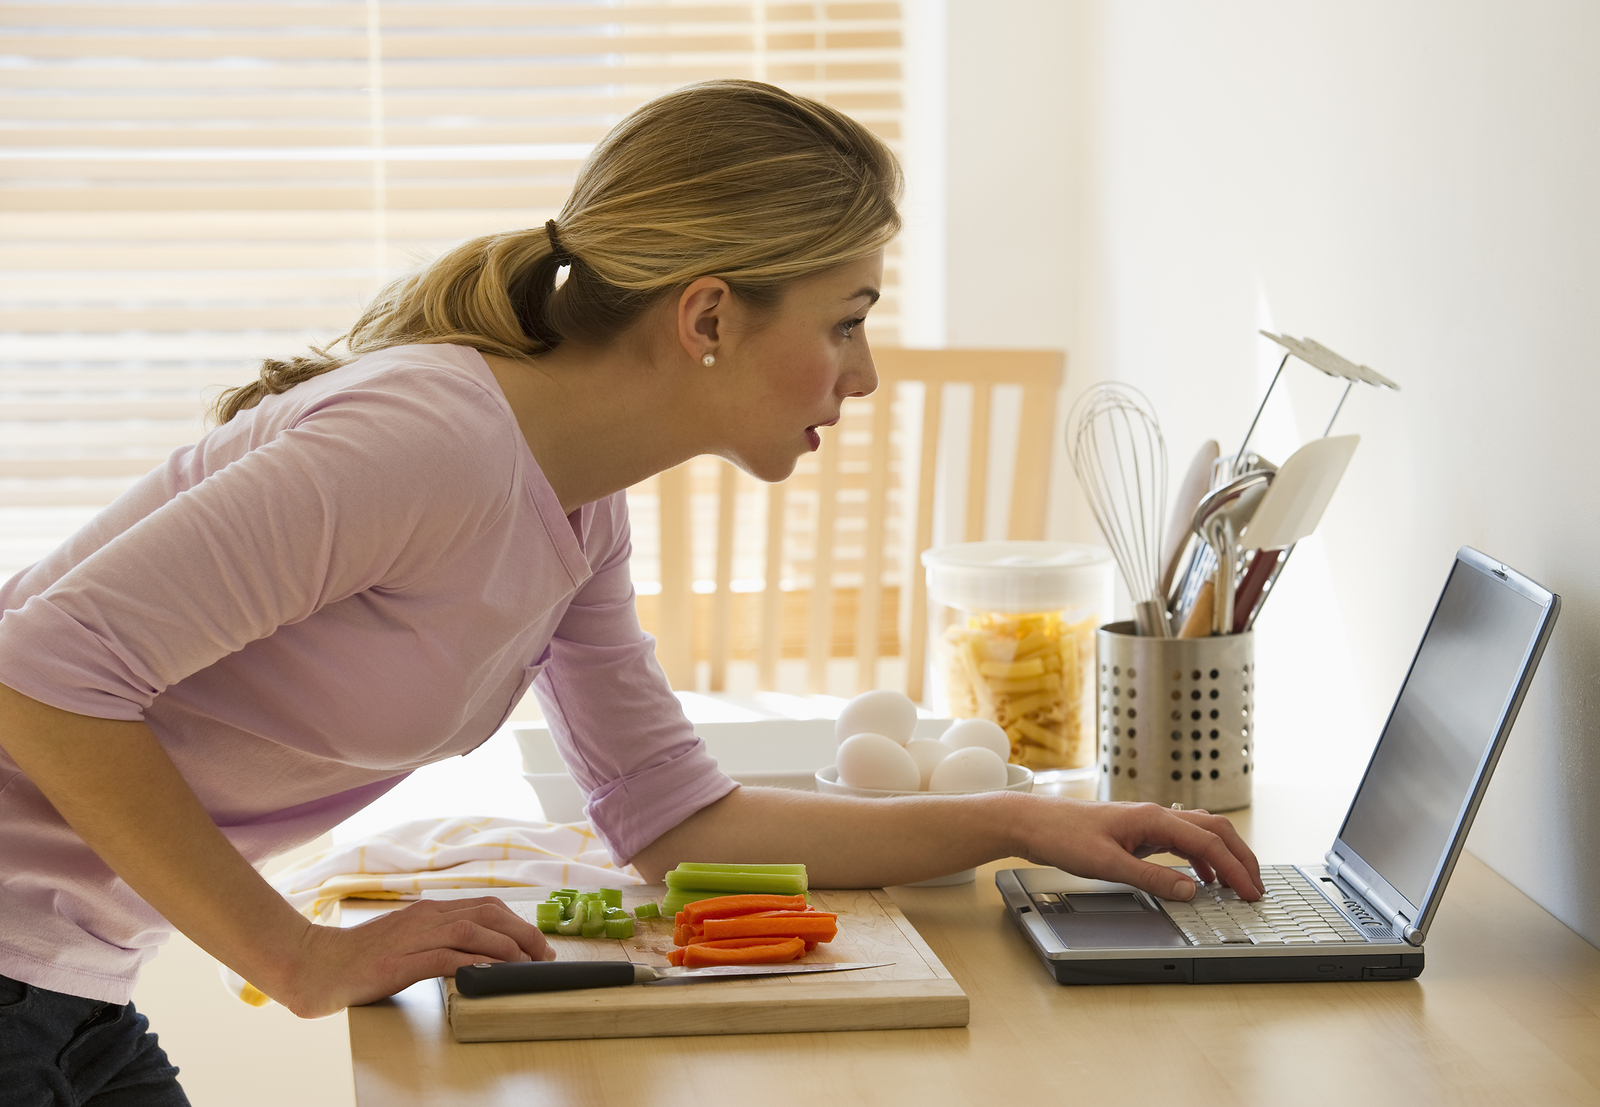 Делать работу красиво. Женщина на кухне за ноутбуком. Девушка за ноутбуком на кухне. Домохозяйка за компьютером. Женщина работает дома.